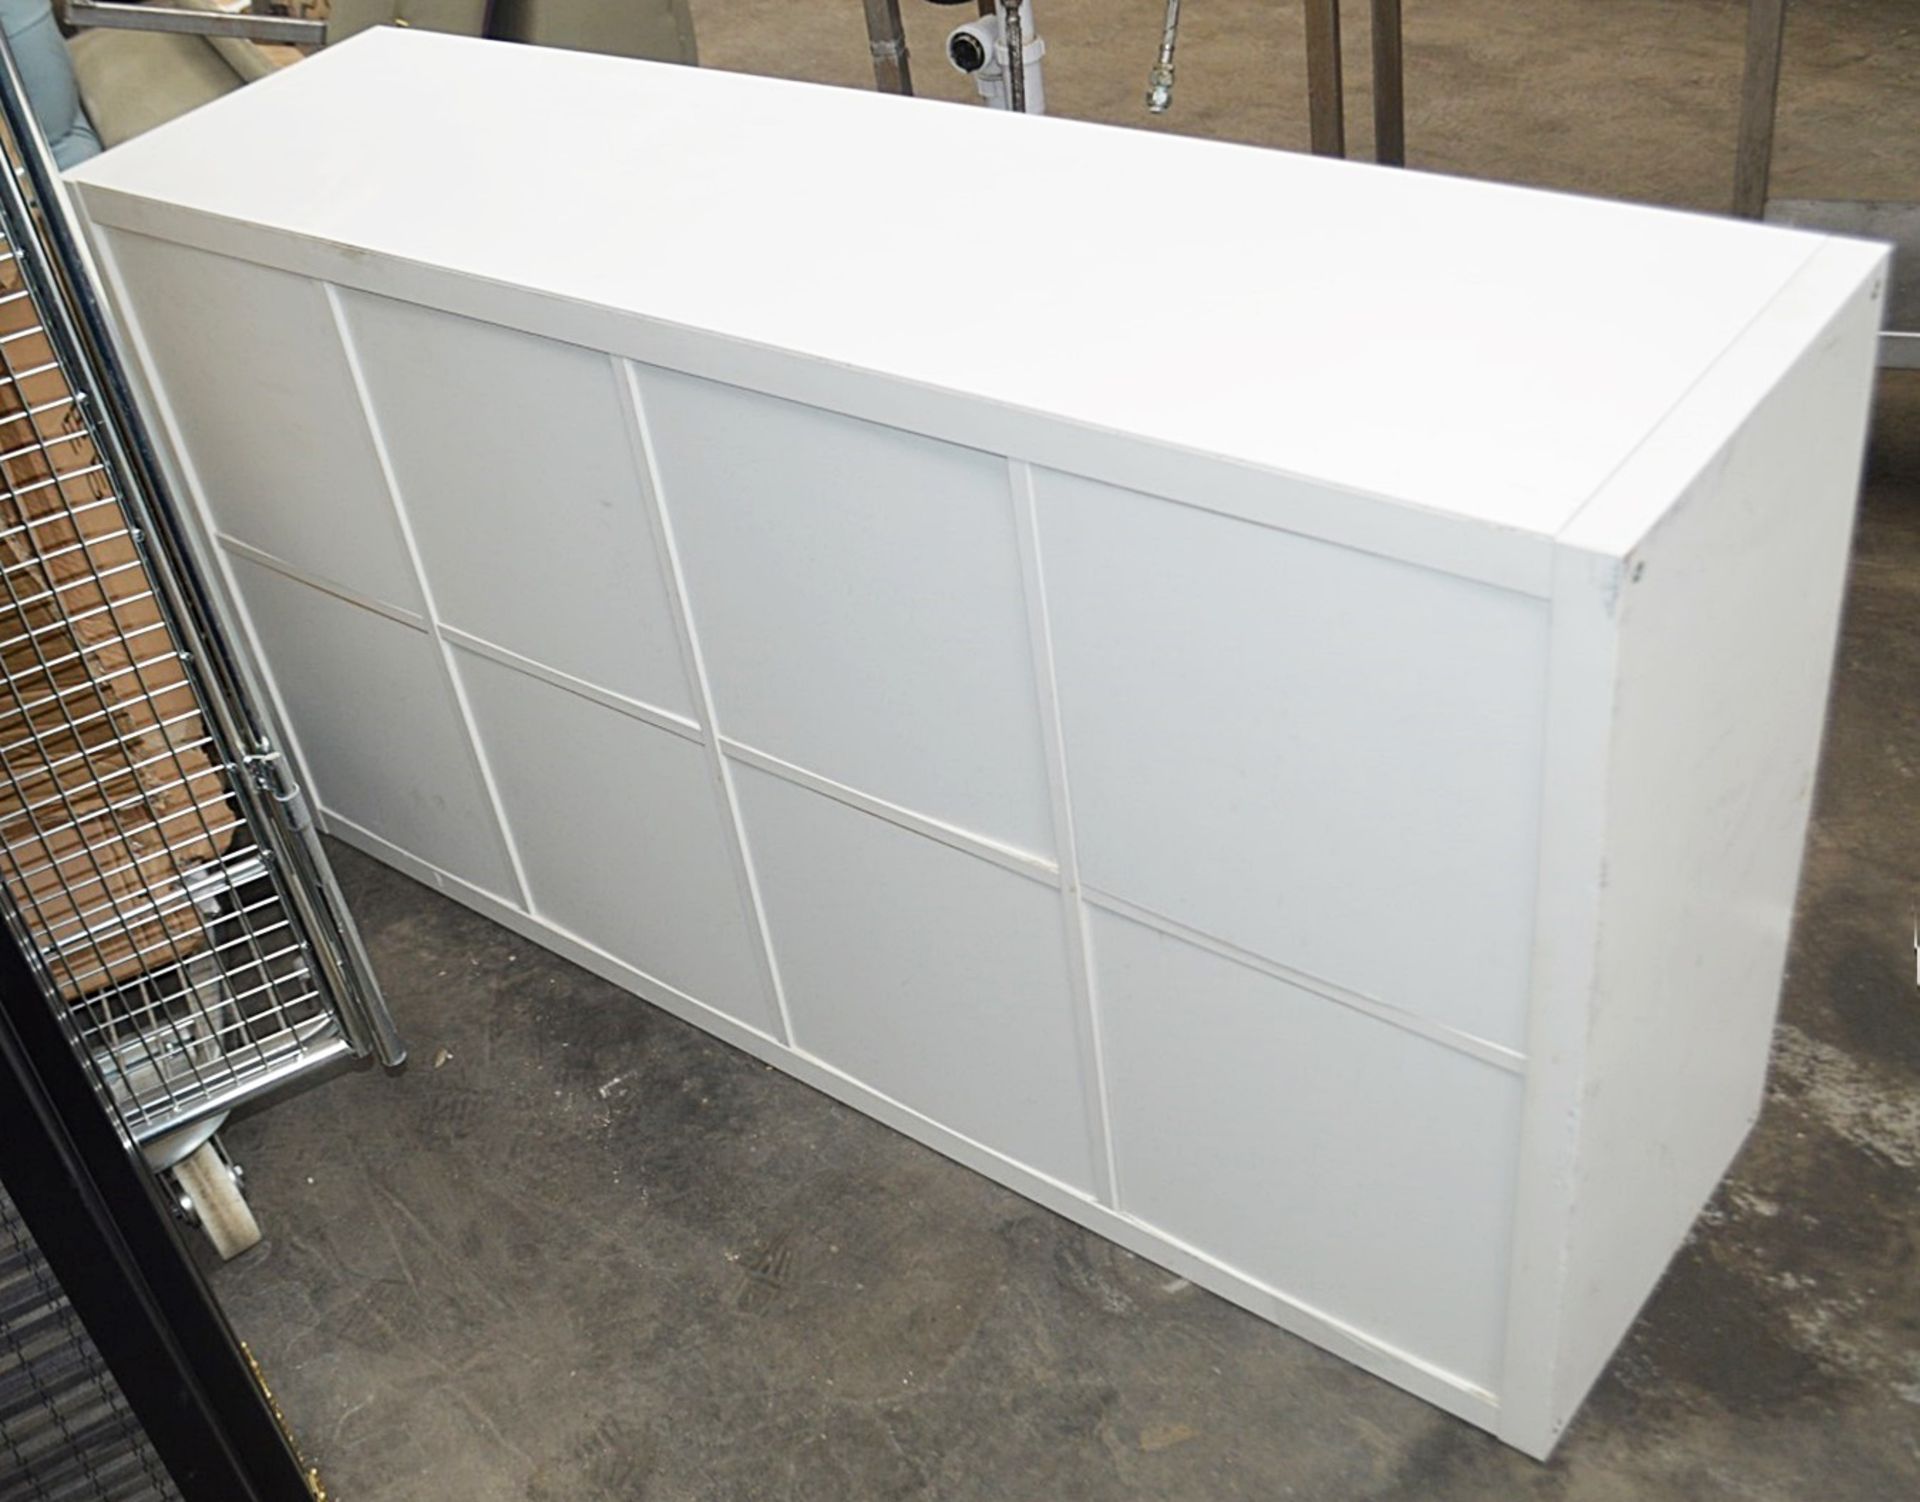 1 x 8-Door Salon Storage Unit In White - Dimensions: H77 x W146.5 x D38.7cm - Ref: MHB135 - - Image 3 of 4